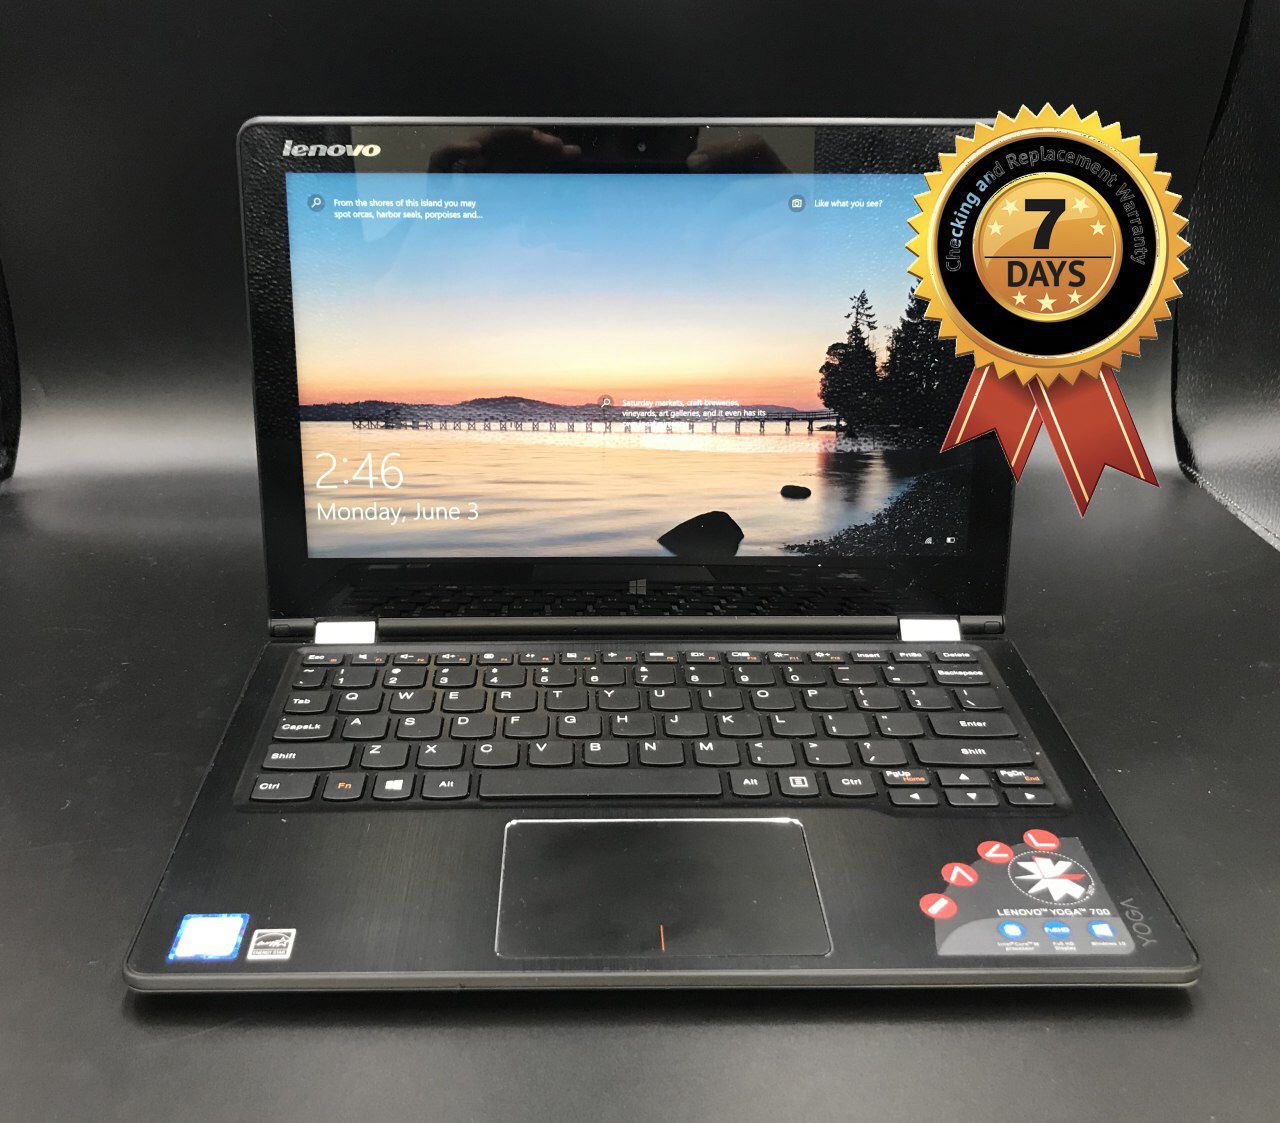 Lenovo Yoga 700 Series 2-in-1 Laptops, 256GB SSD, 4GB Ram, Windows 10 - $320